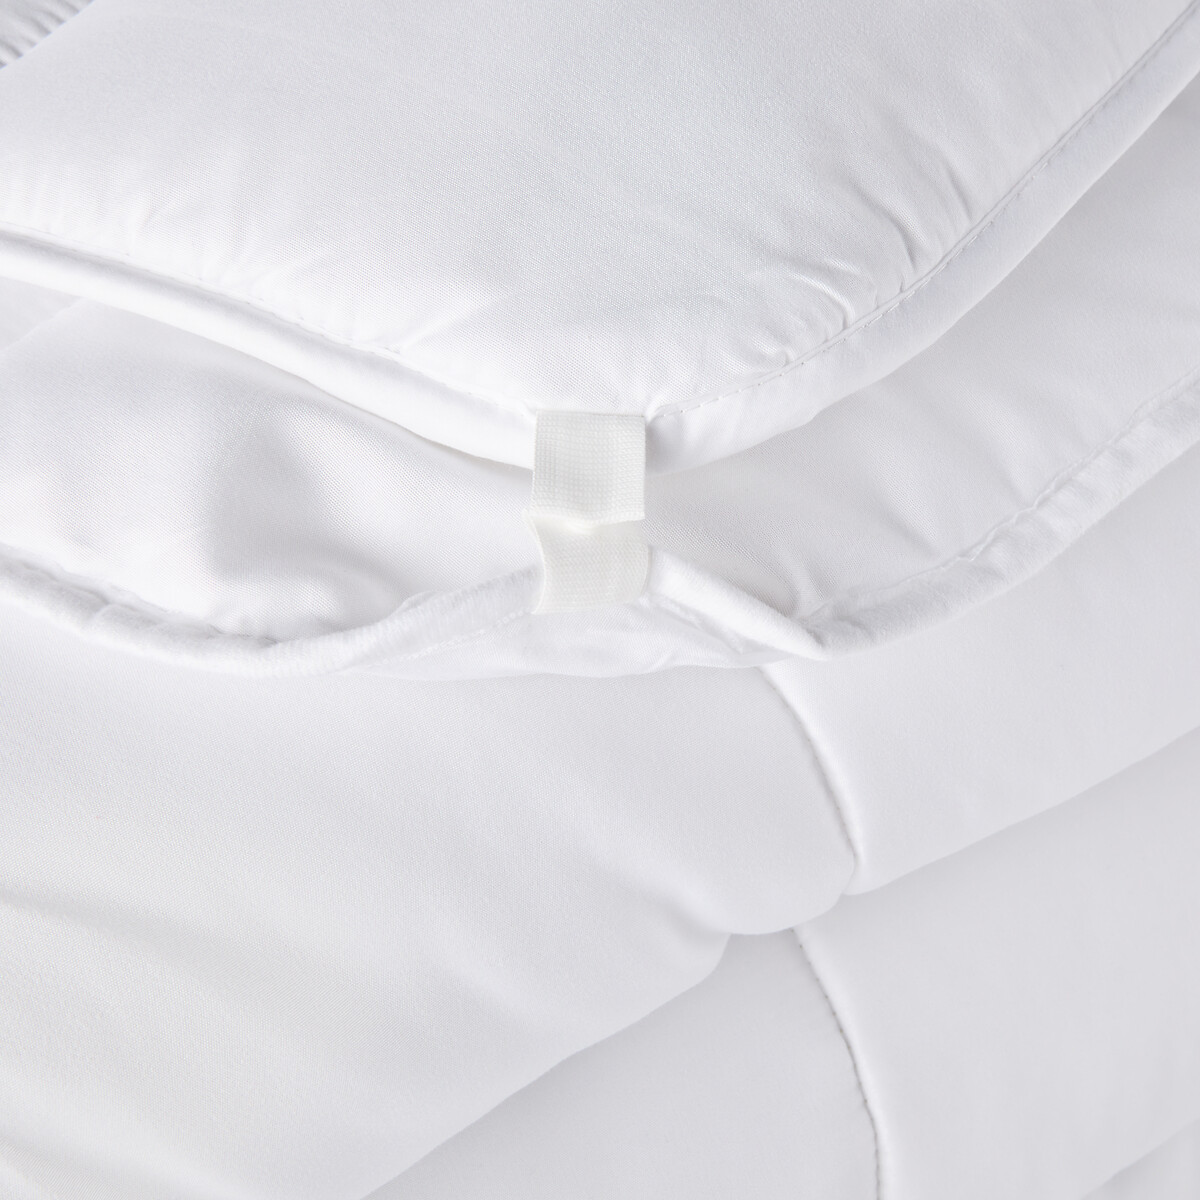 Одеяло La Redoute Двойное  сезона  гм и  гм  полиэстер  240 x 220 см белый, размер 240 x 220 см - фото 3